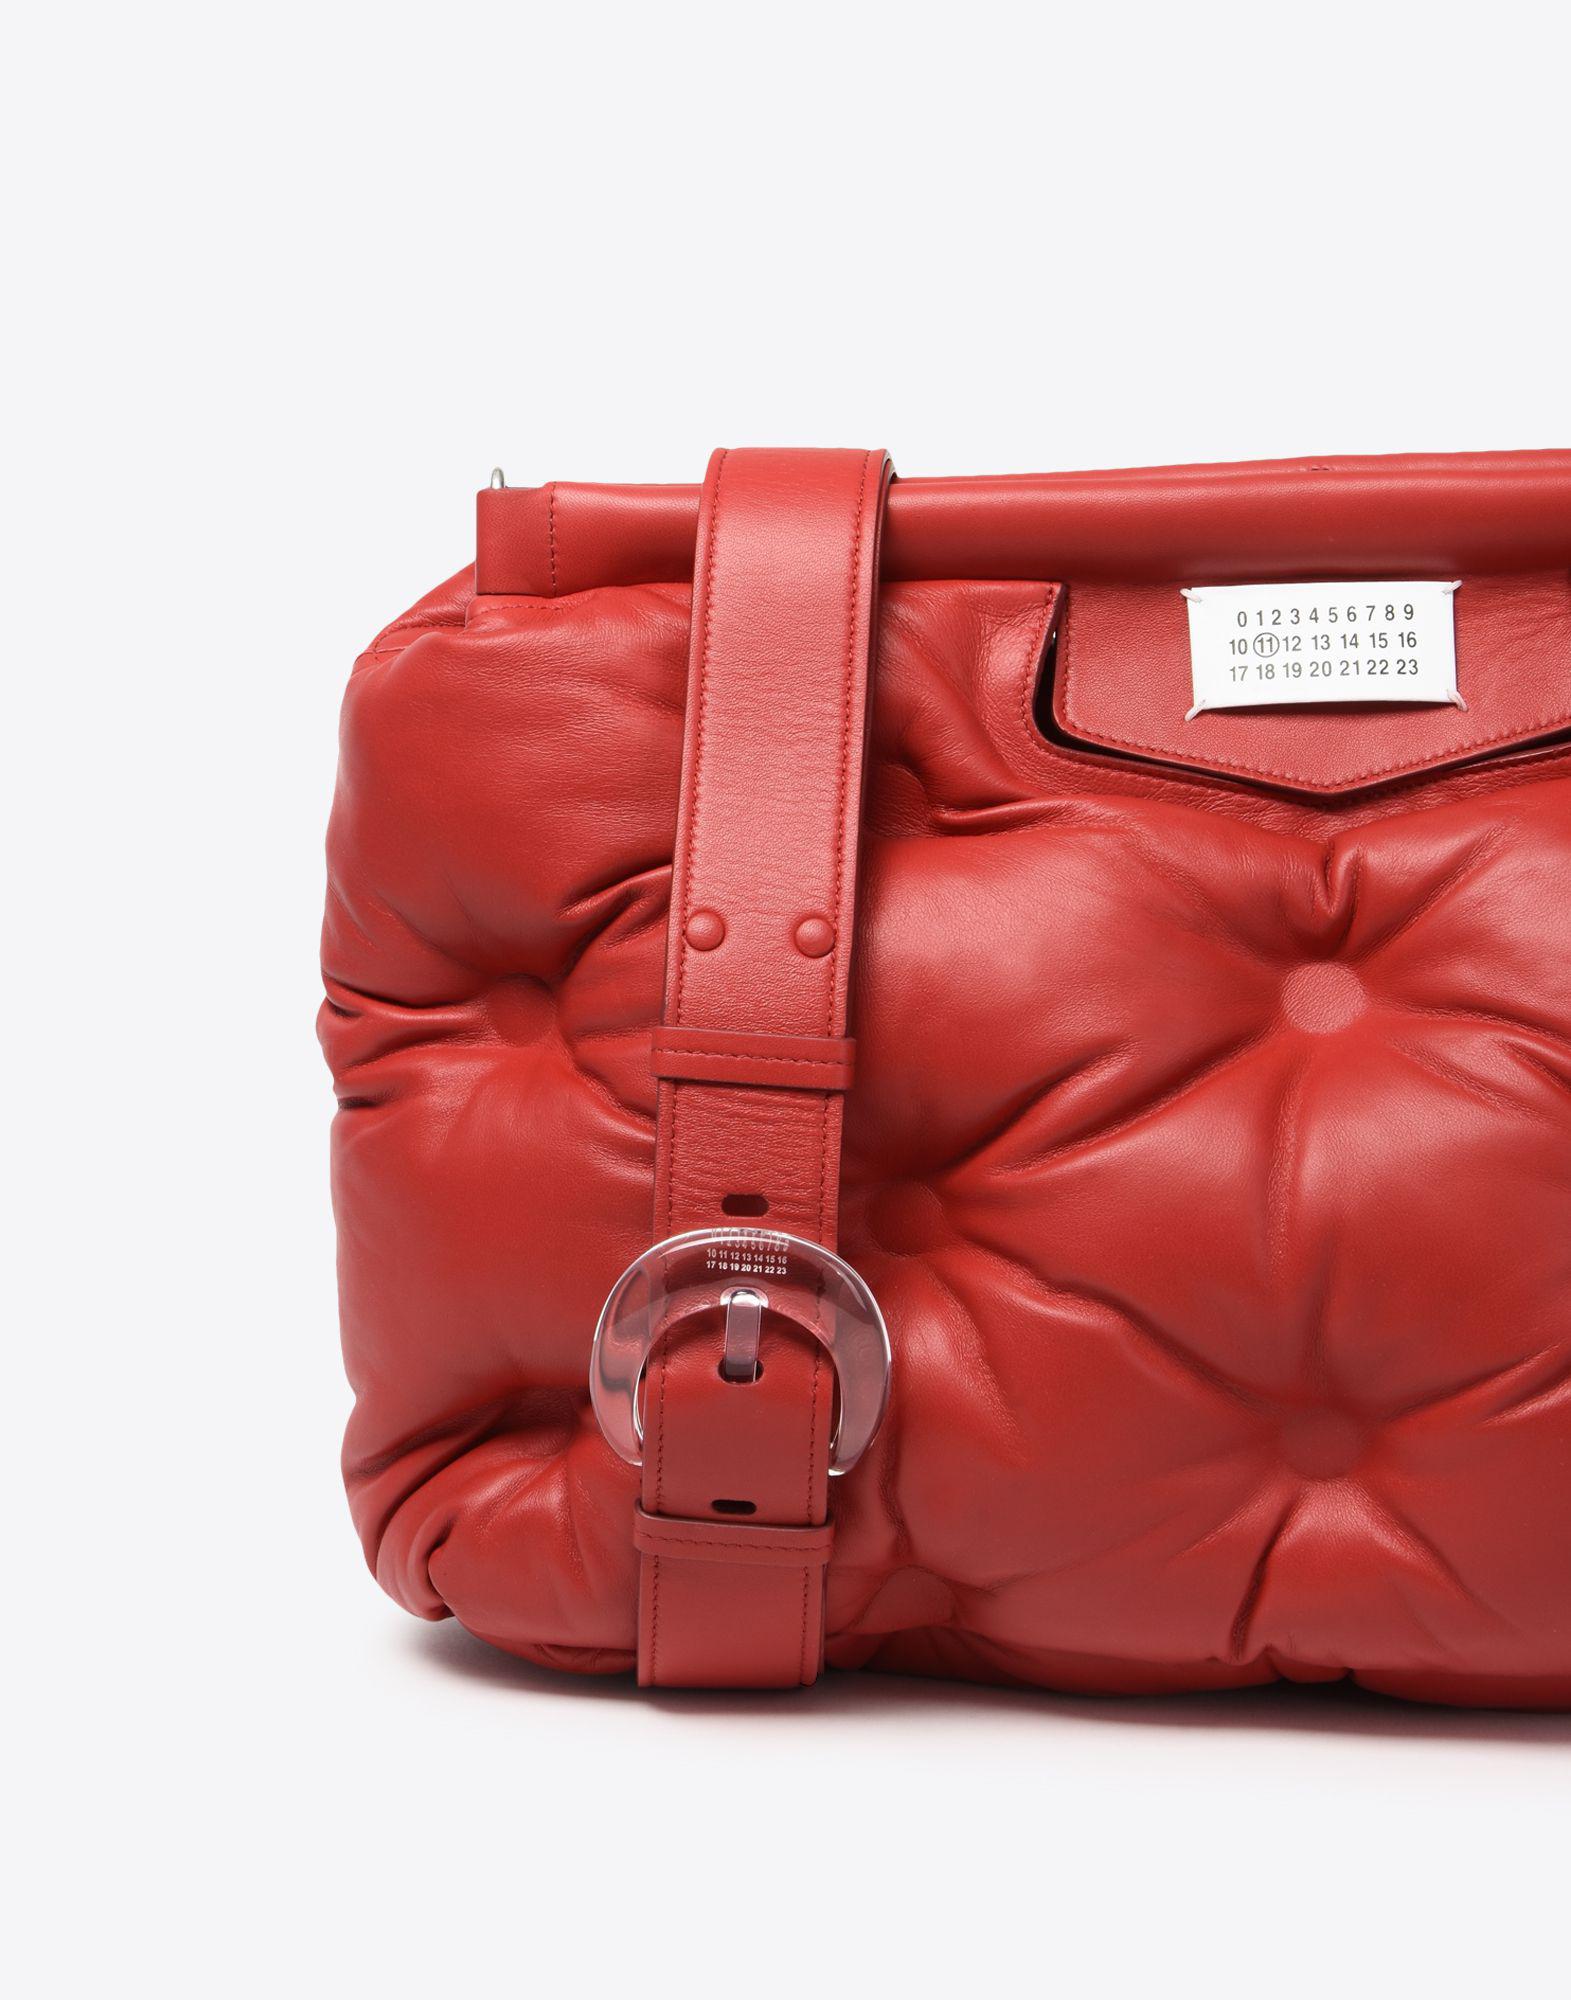 Maison Margiela Leather Glam Slam Bag in Red - Lyst